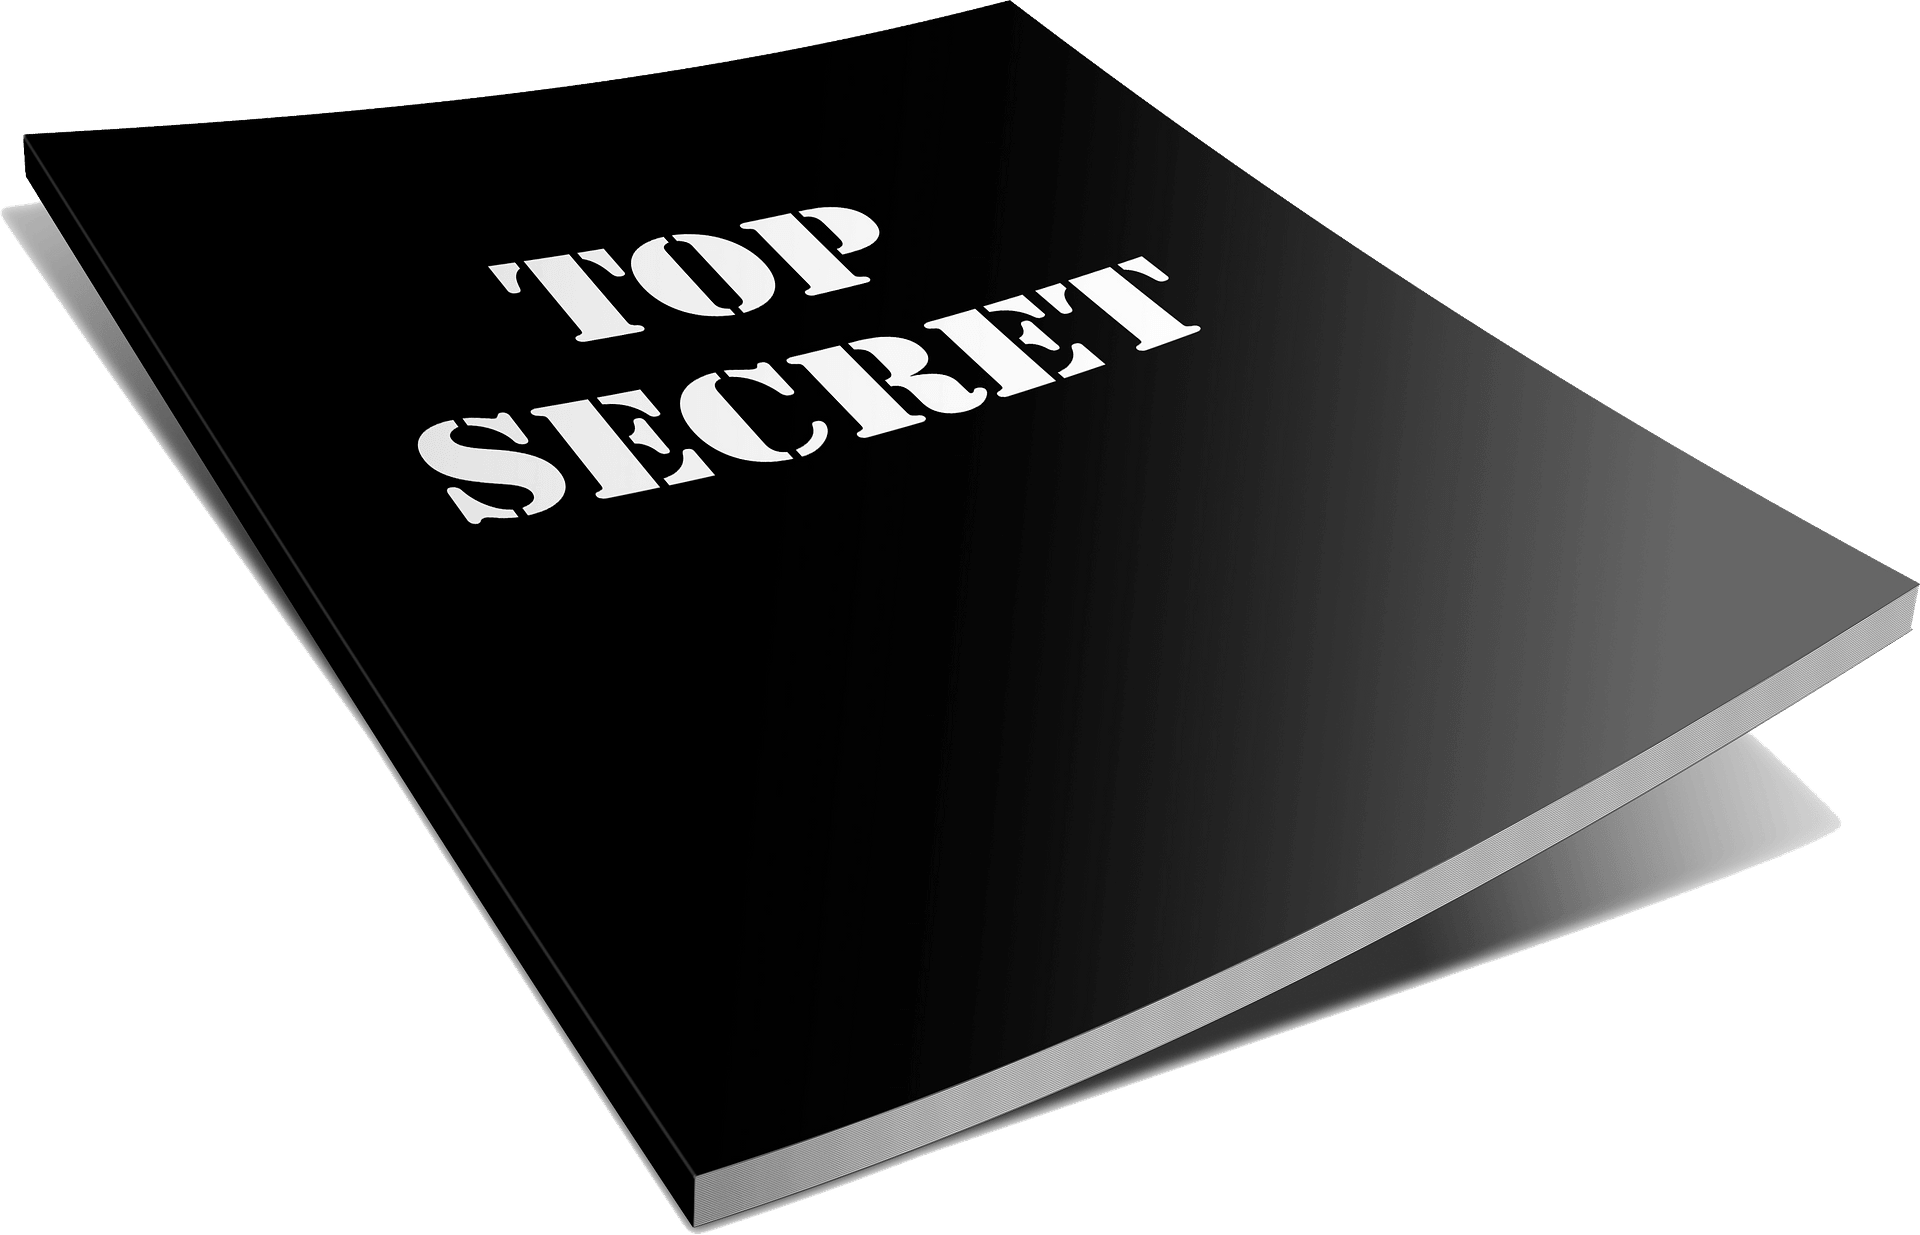 Top Secret Spy Clipart Clip Art Library Clip Art Library